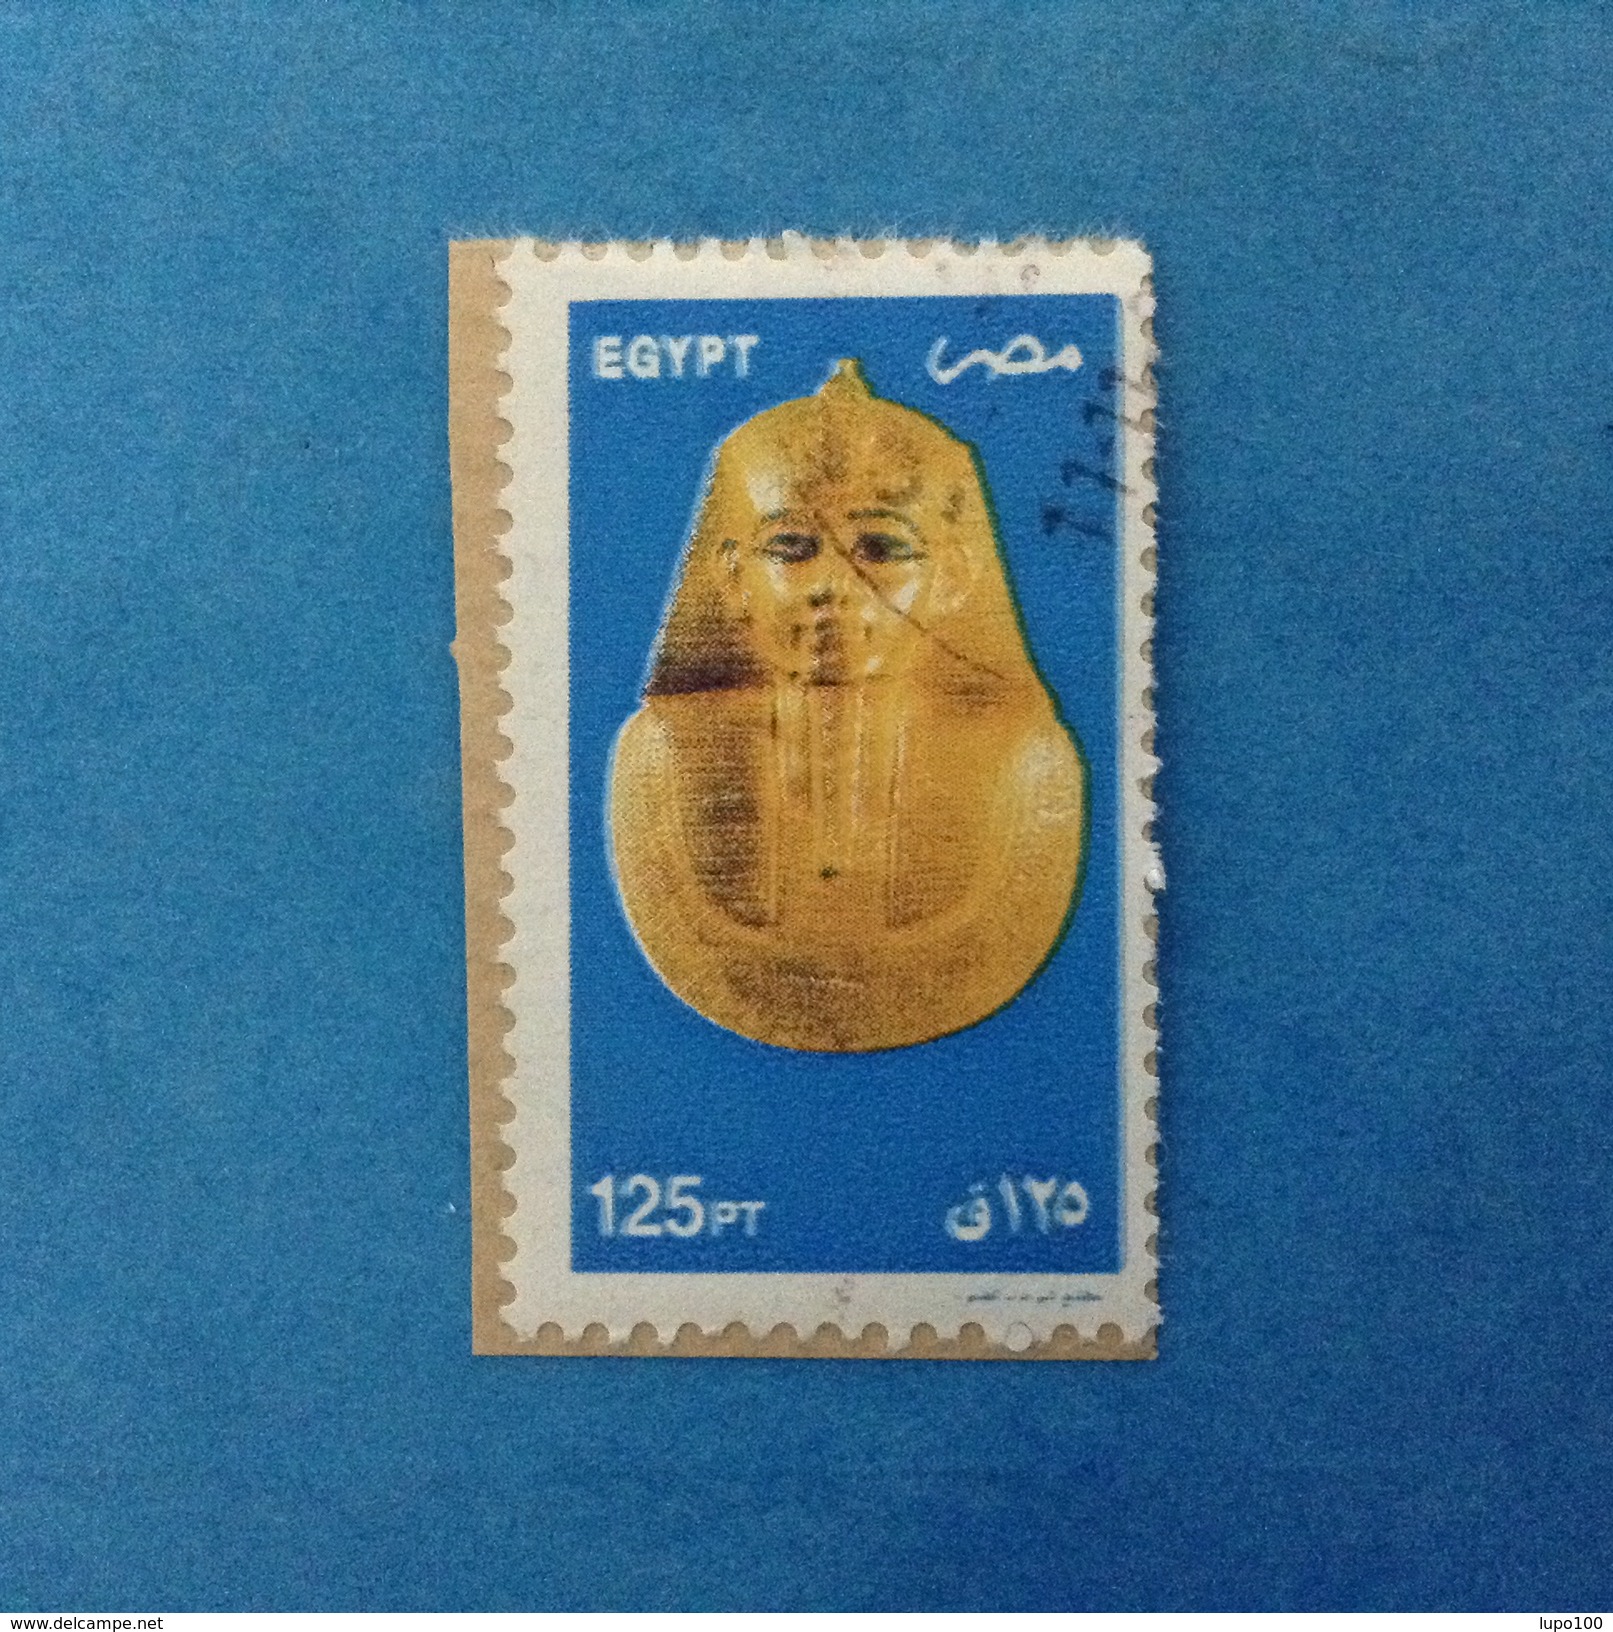 2002 EGITTO EGYPT FRANCOBOLLO USATO STAMP USED - MASCHERA FARAONE 125 - Gebraucht